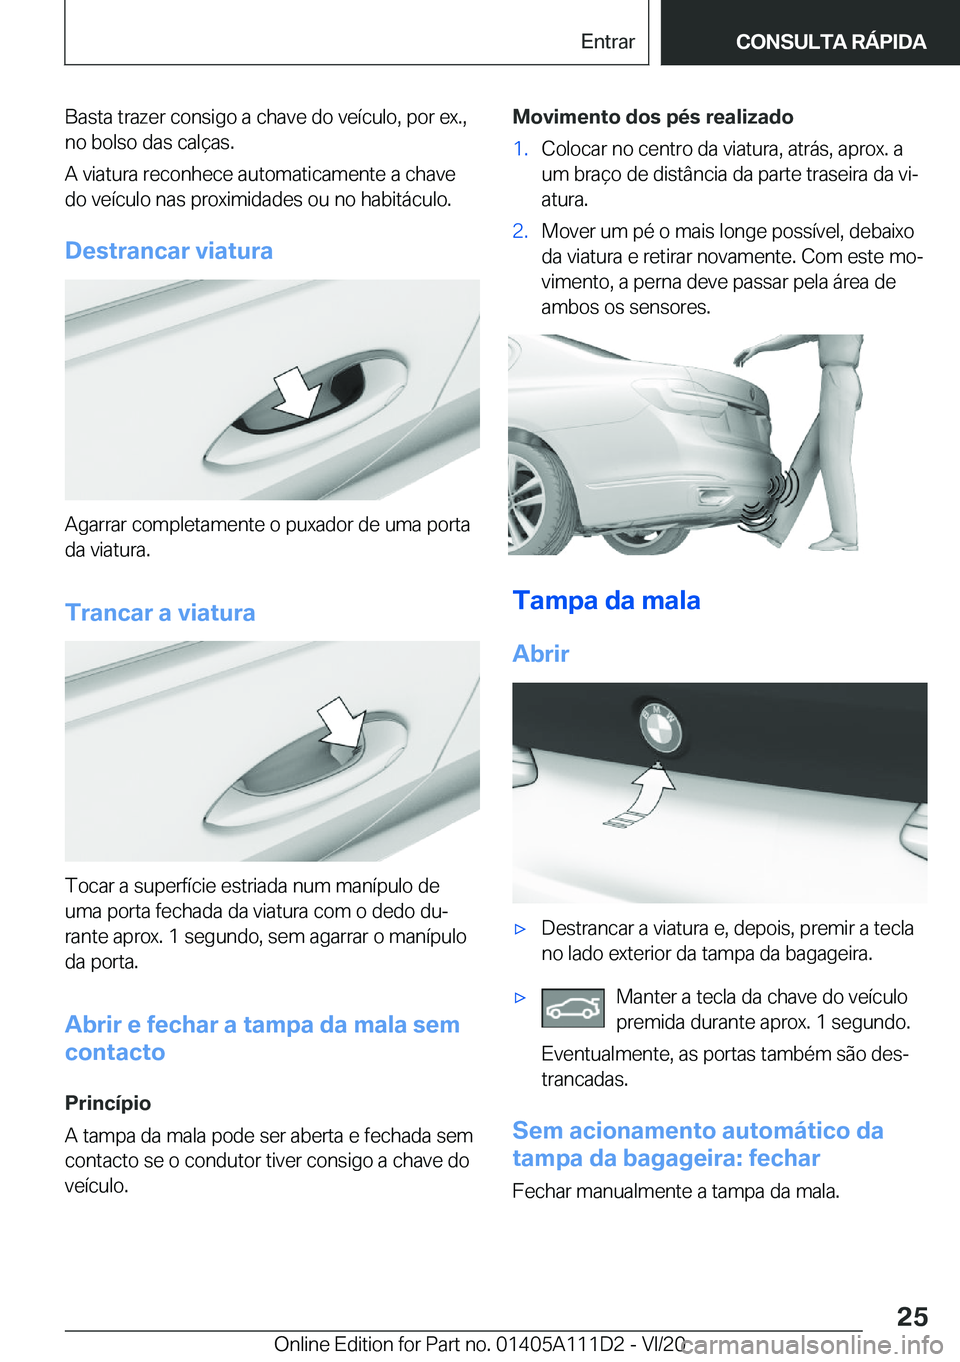 BMW 3 SERIES SEDAN PLUG-IN HYBRID 2021  Manual do condutor (in Portuguese) �B�a�s�t�a��t�r�a�z�e�r��c�o�n�s�i�g�o��a��c�h�a�v�e��d�o��v�e�